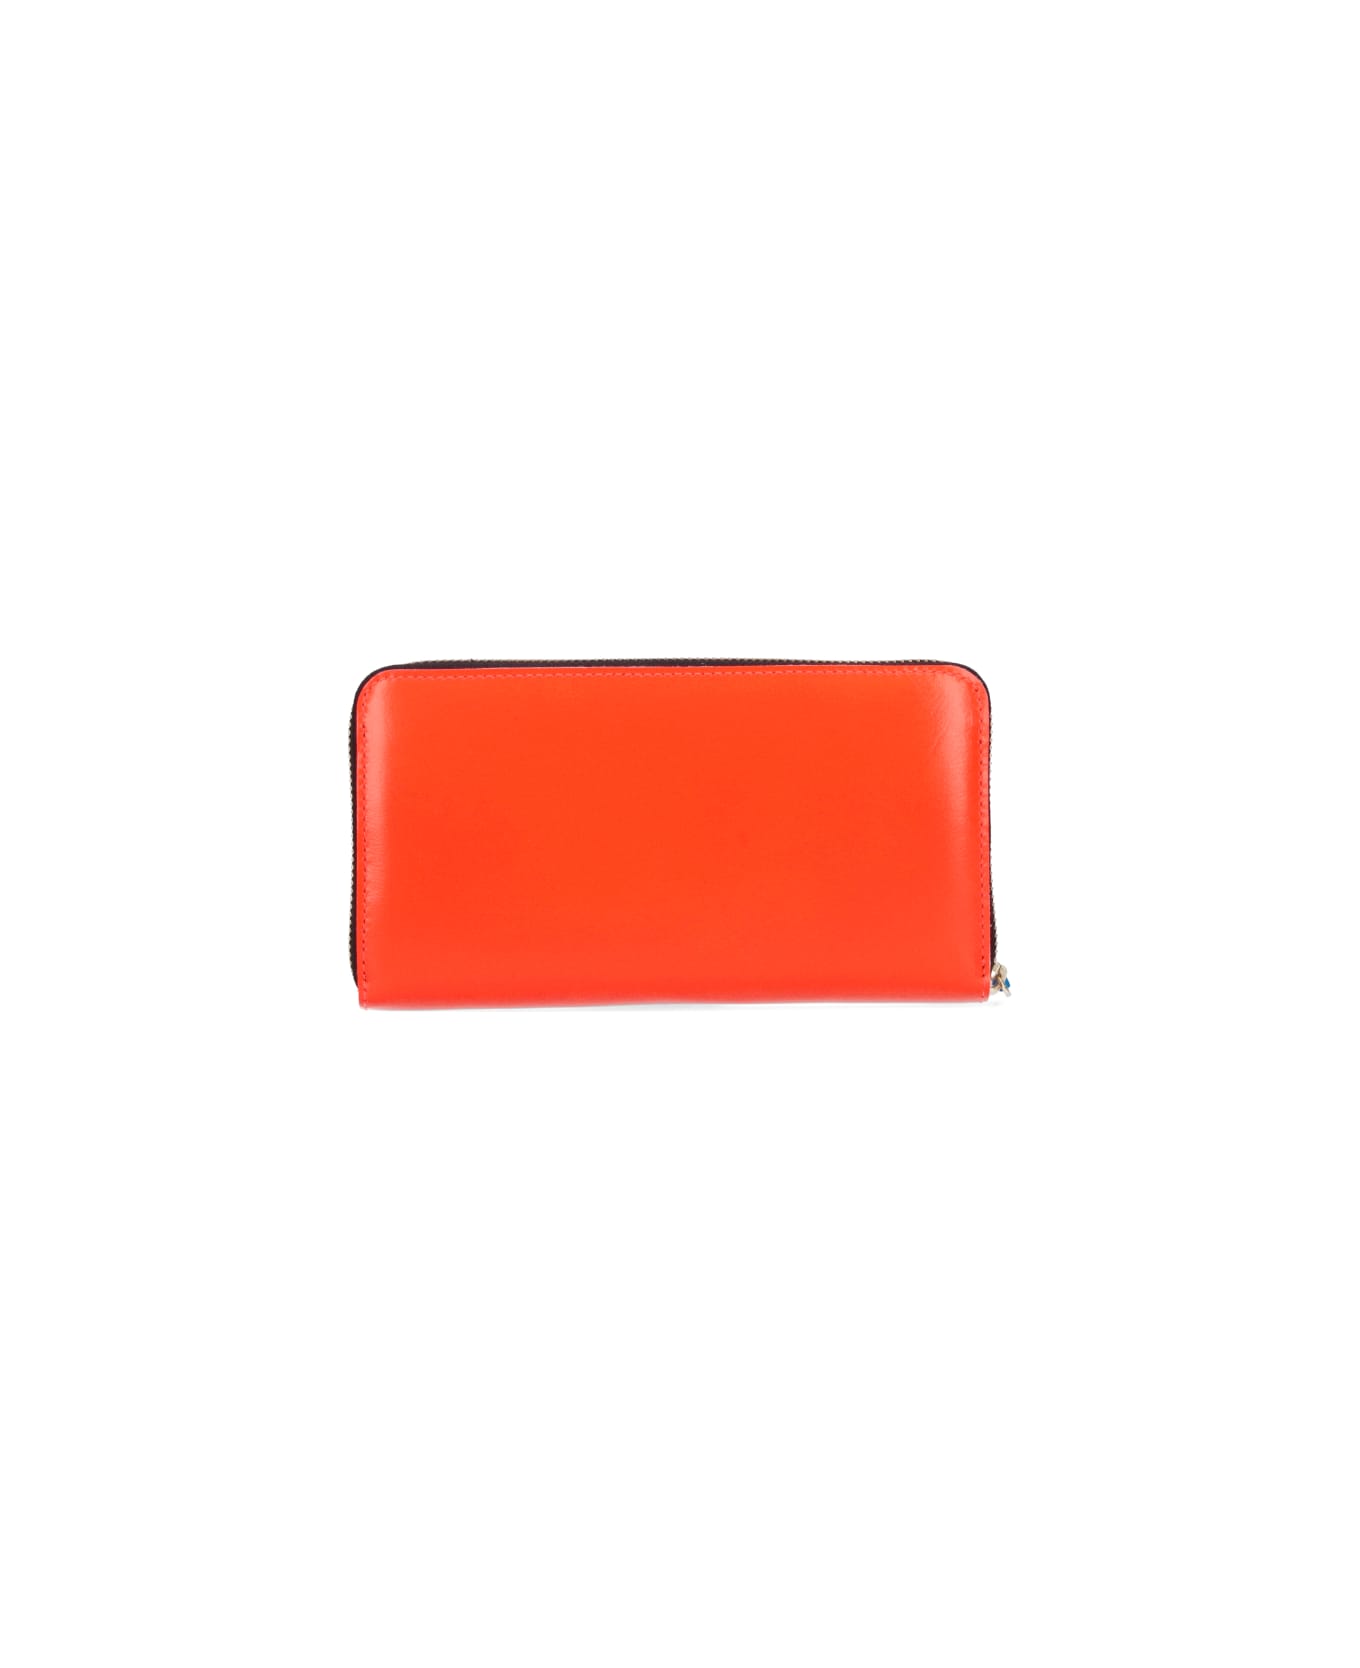 Comme des Garçons Wallet Super Fluo Zipper Wallet - Orange